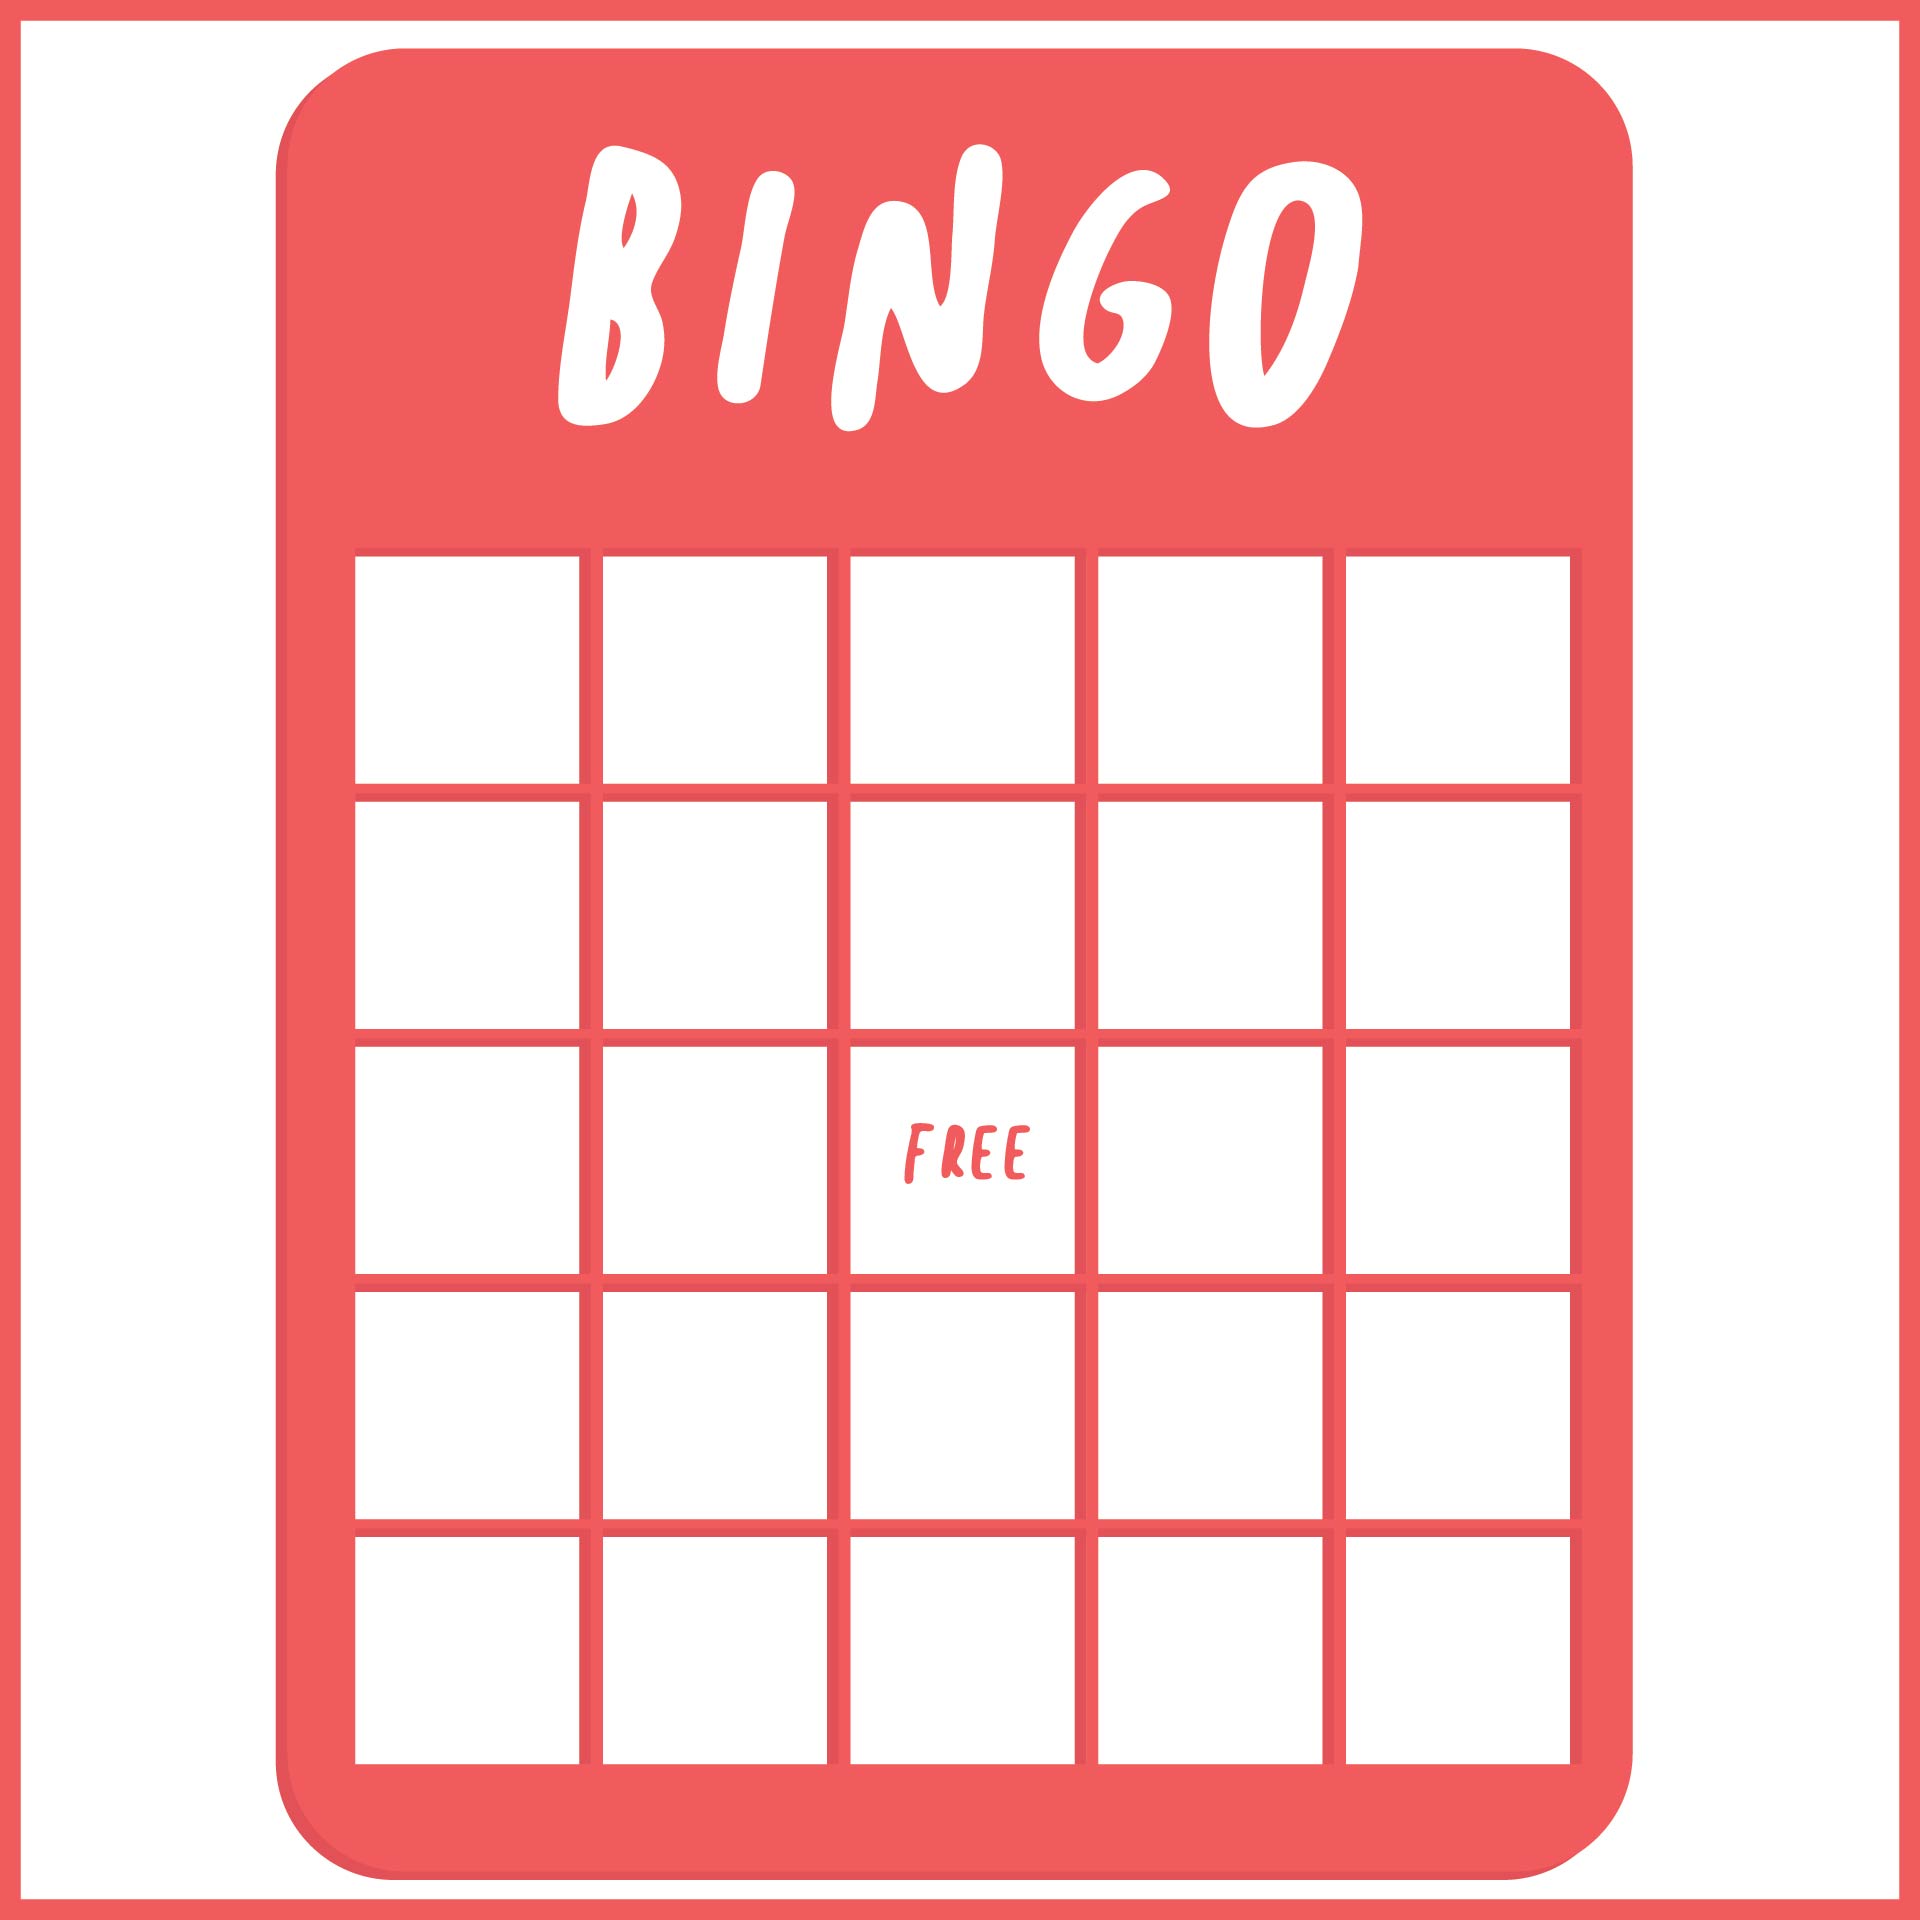 blank 5x5 bingo cards template